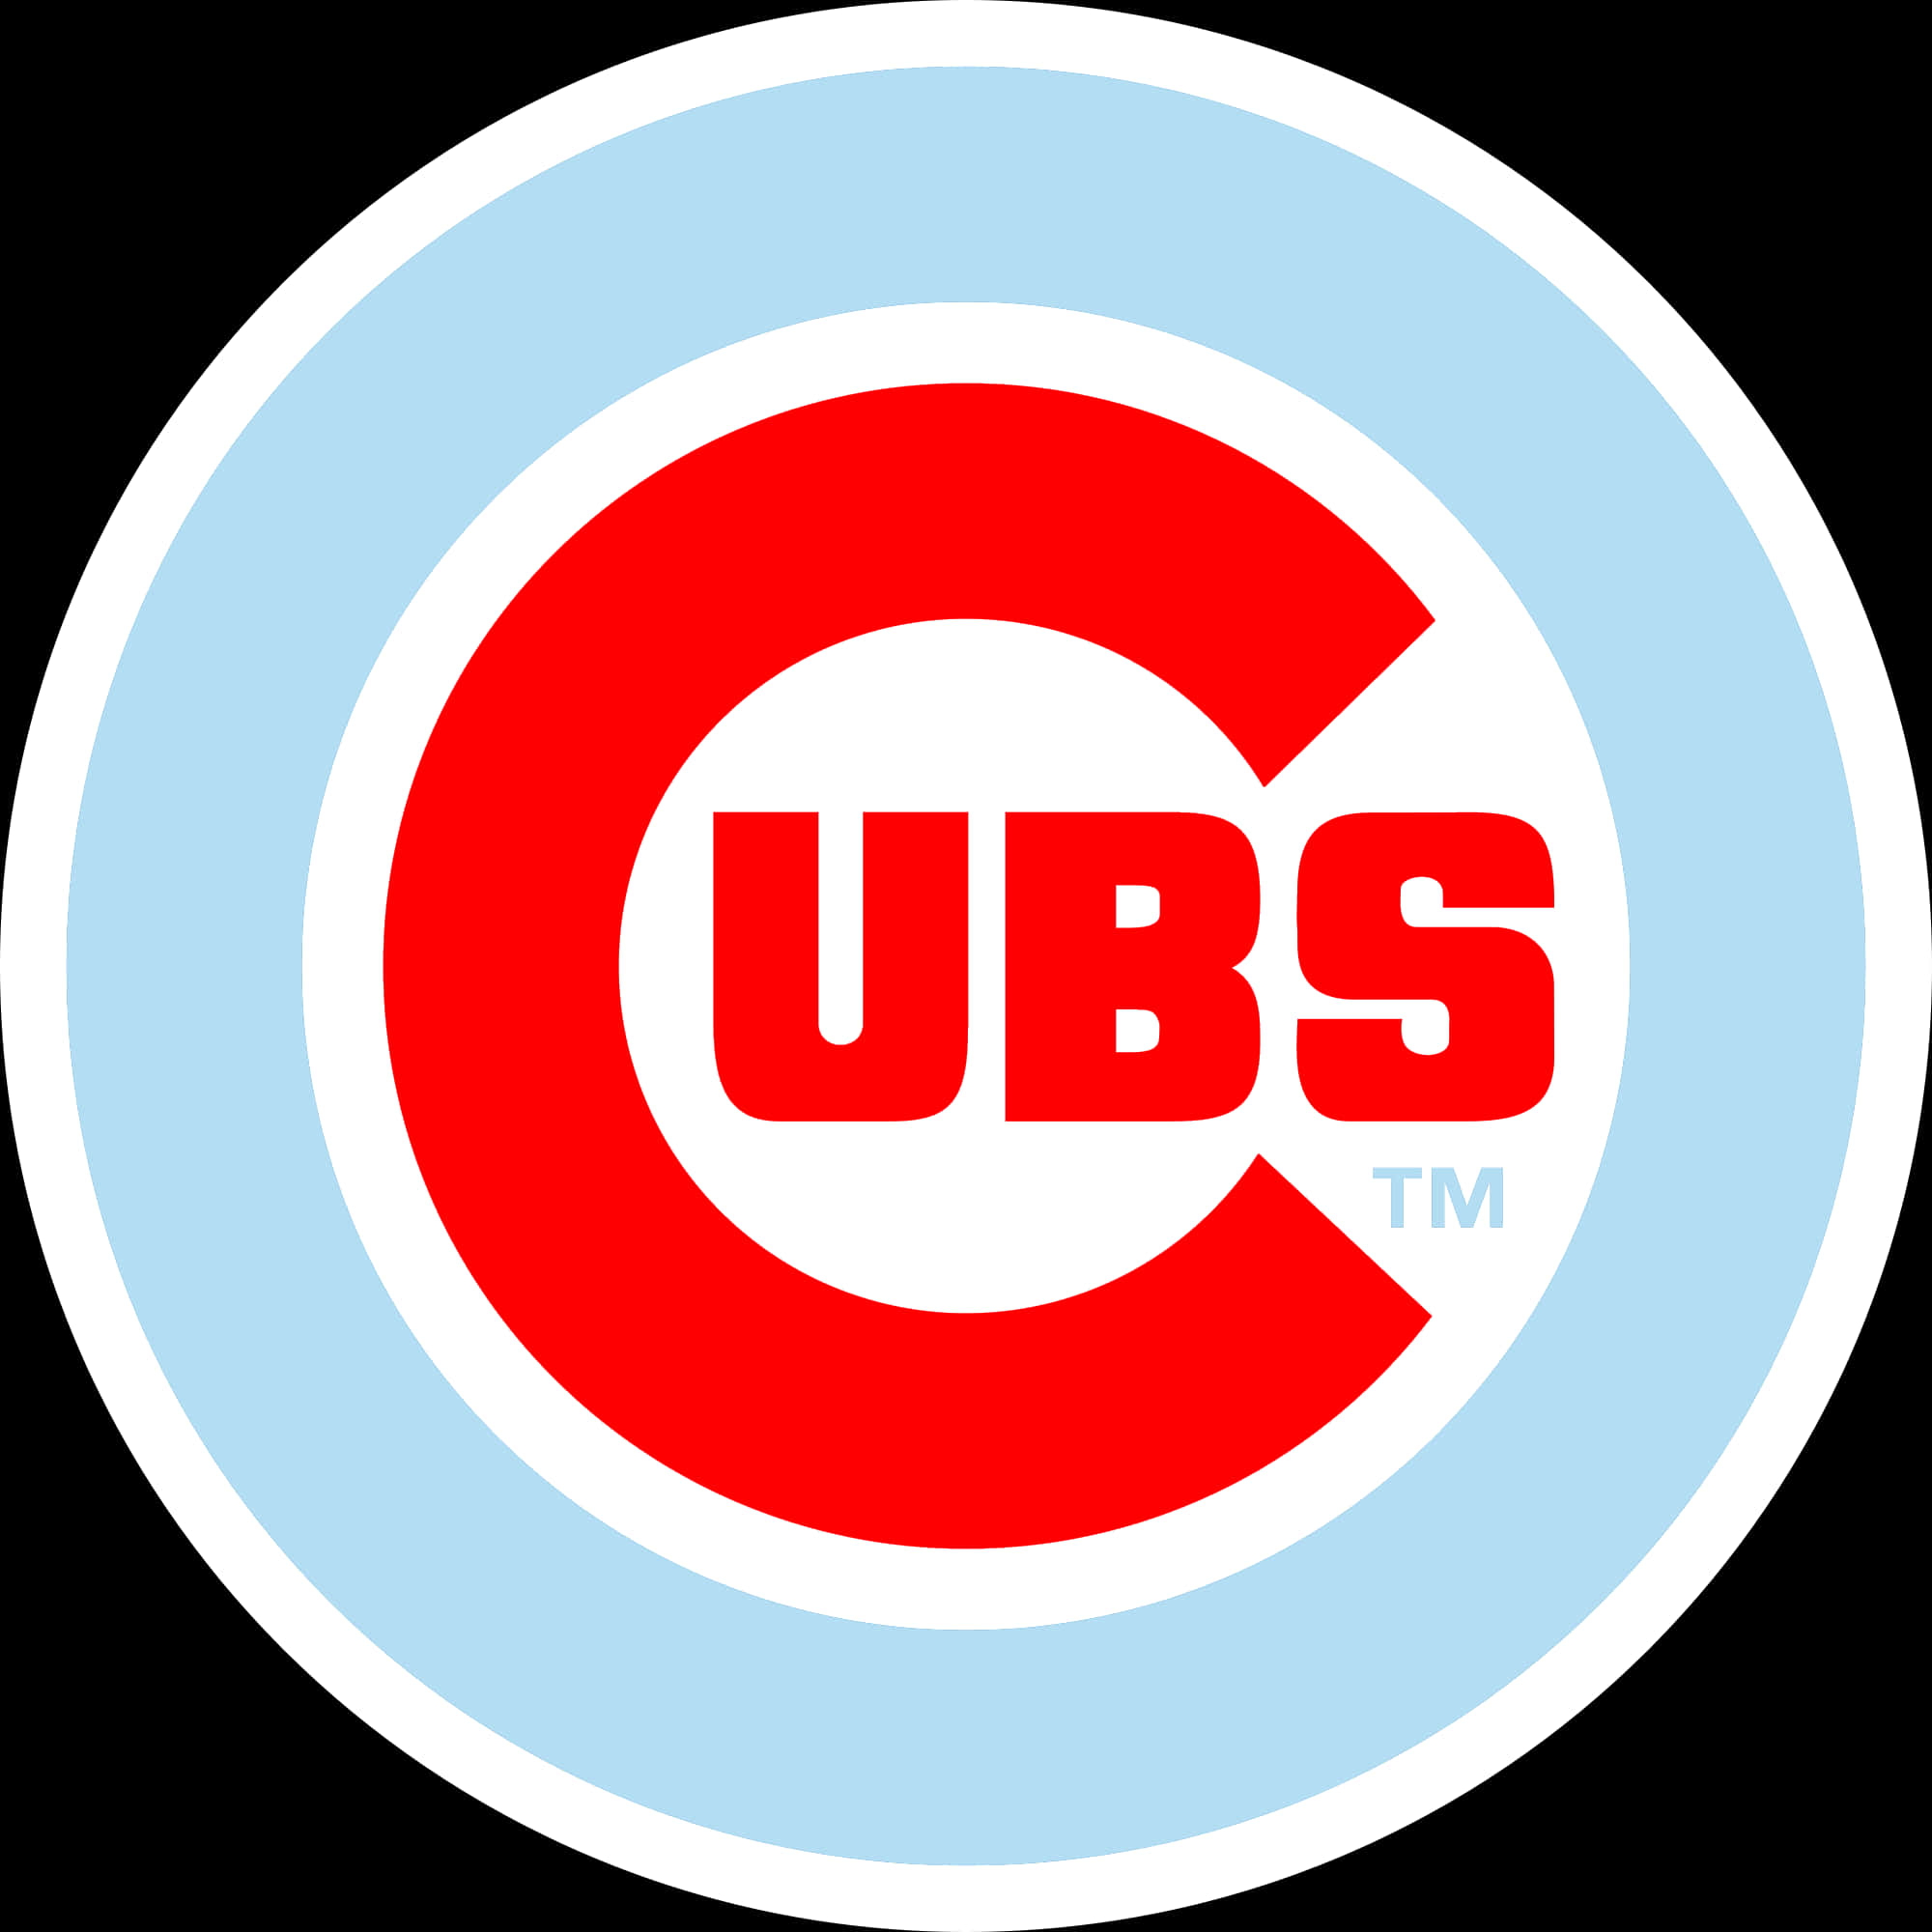 Chicago Cubs Logo PNG image